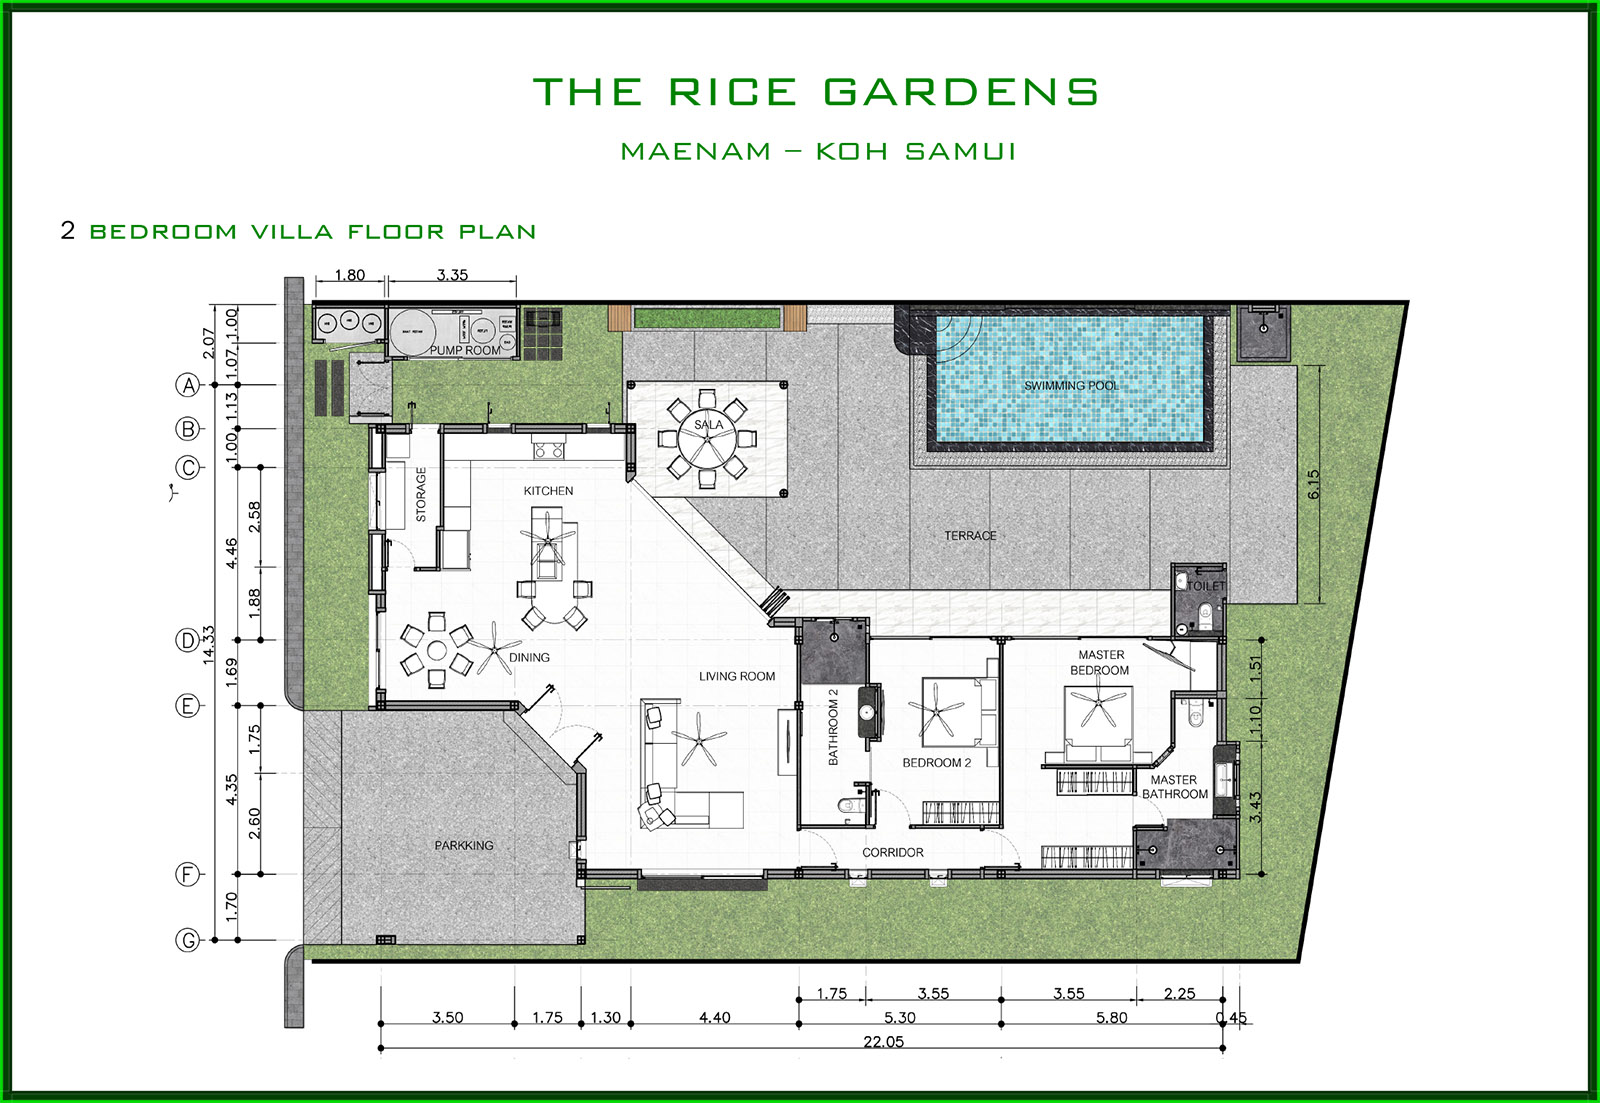 The Rice Gardens - Contemporary 2-4 Bedroom Garden Pool Villa in Maenam for sale: The Rice Gardens - Contemporary 2-4 Bedroom Garden Pool Villa in Maenam for sale